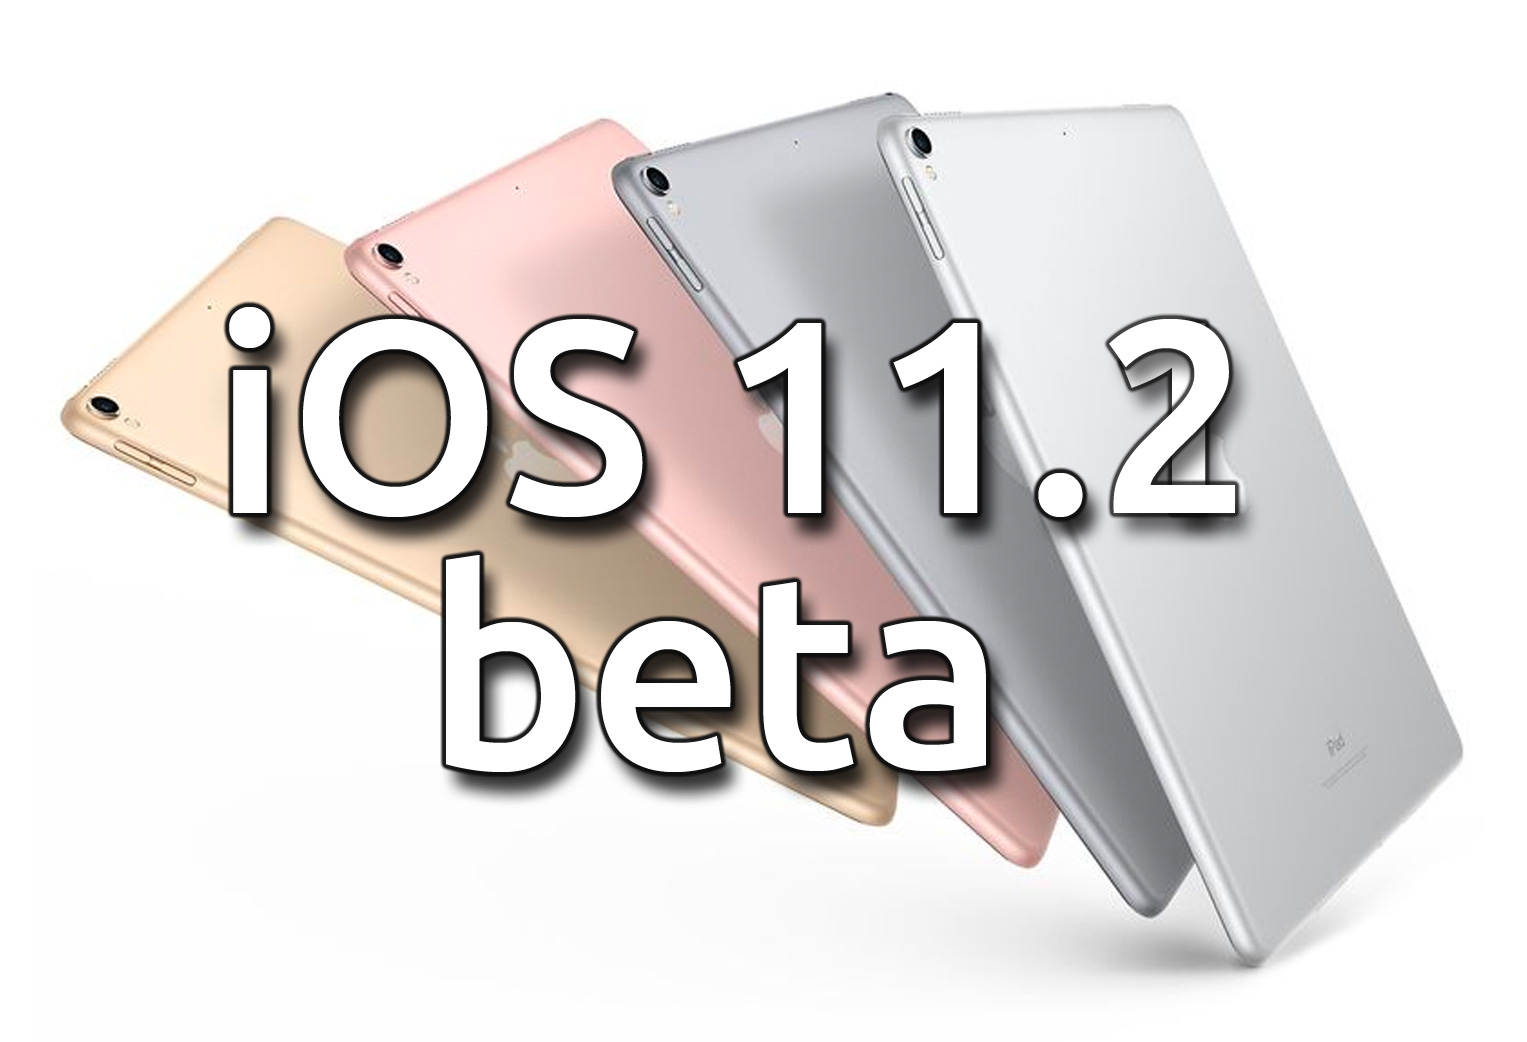 iOS 11.2 beta